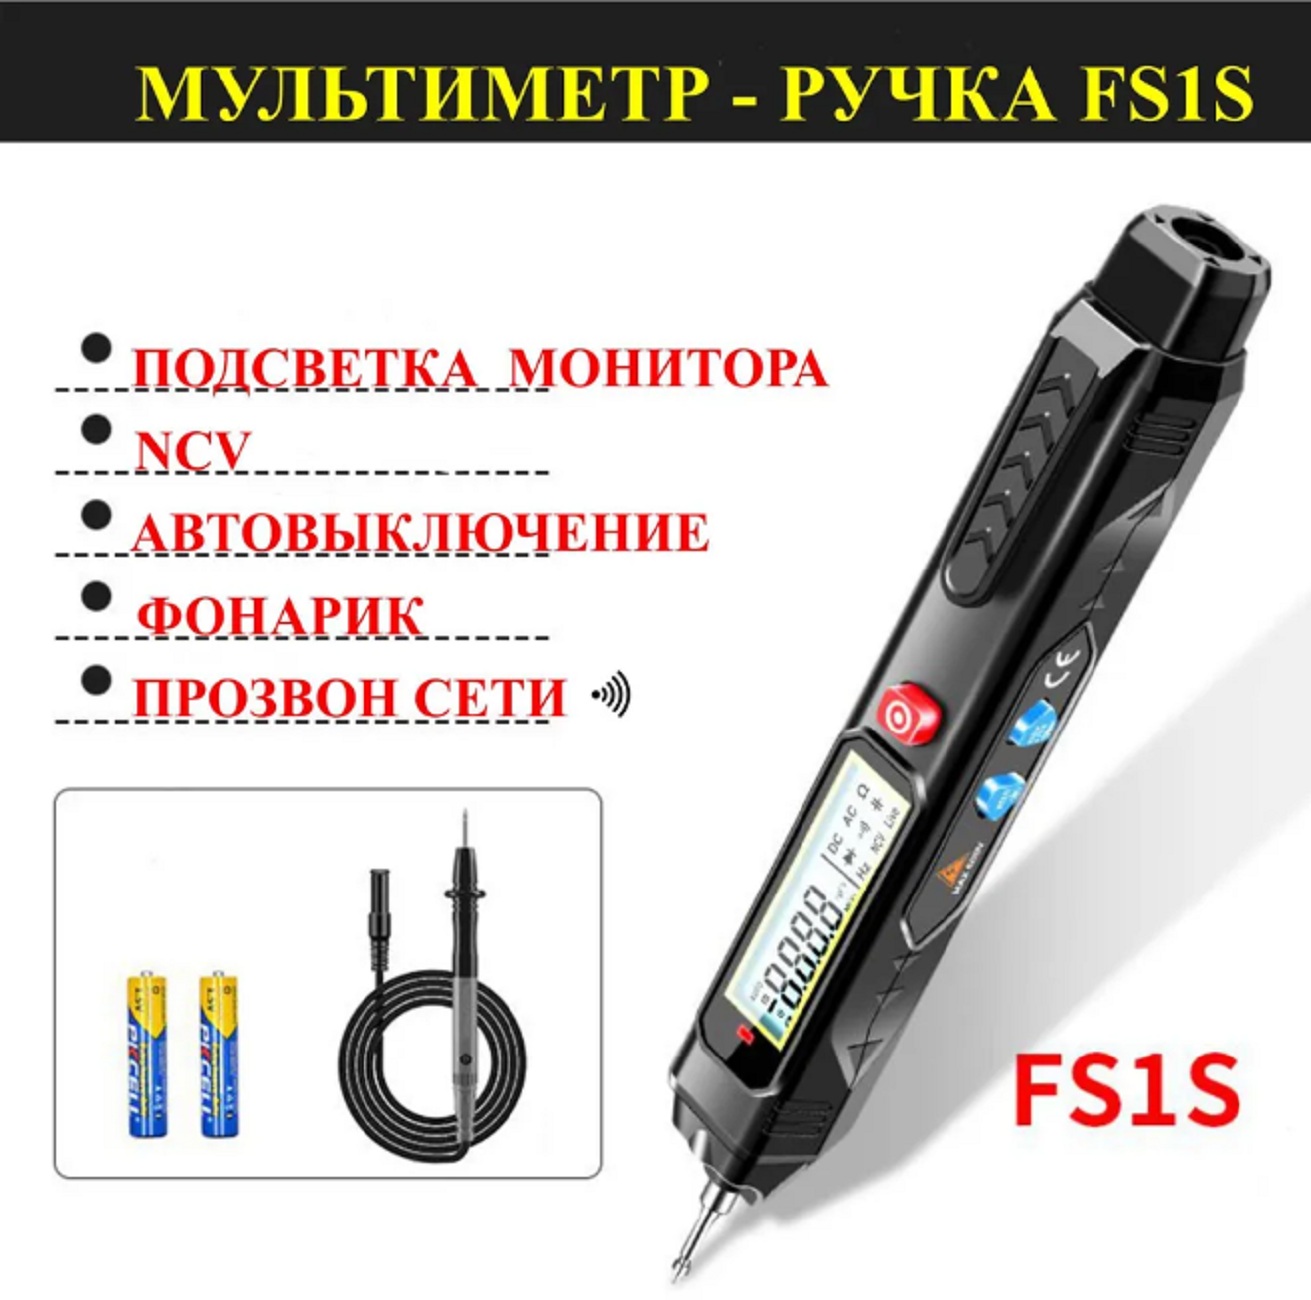 Мультиметр ЗВЕЗДА ручка измерение FS1S, тестер с ЖК-дисплеем,№3